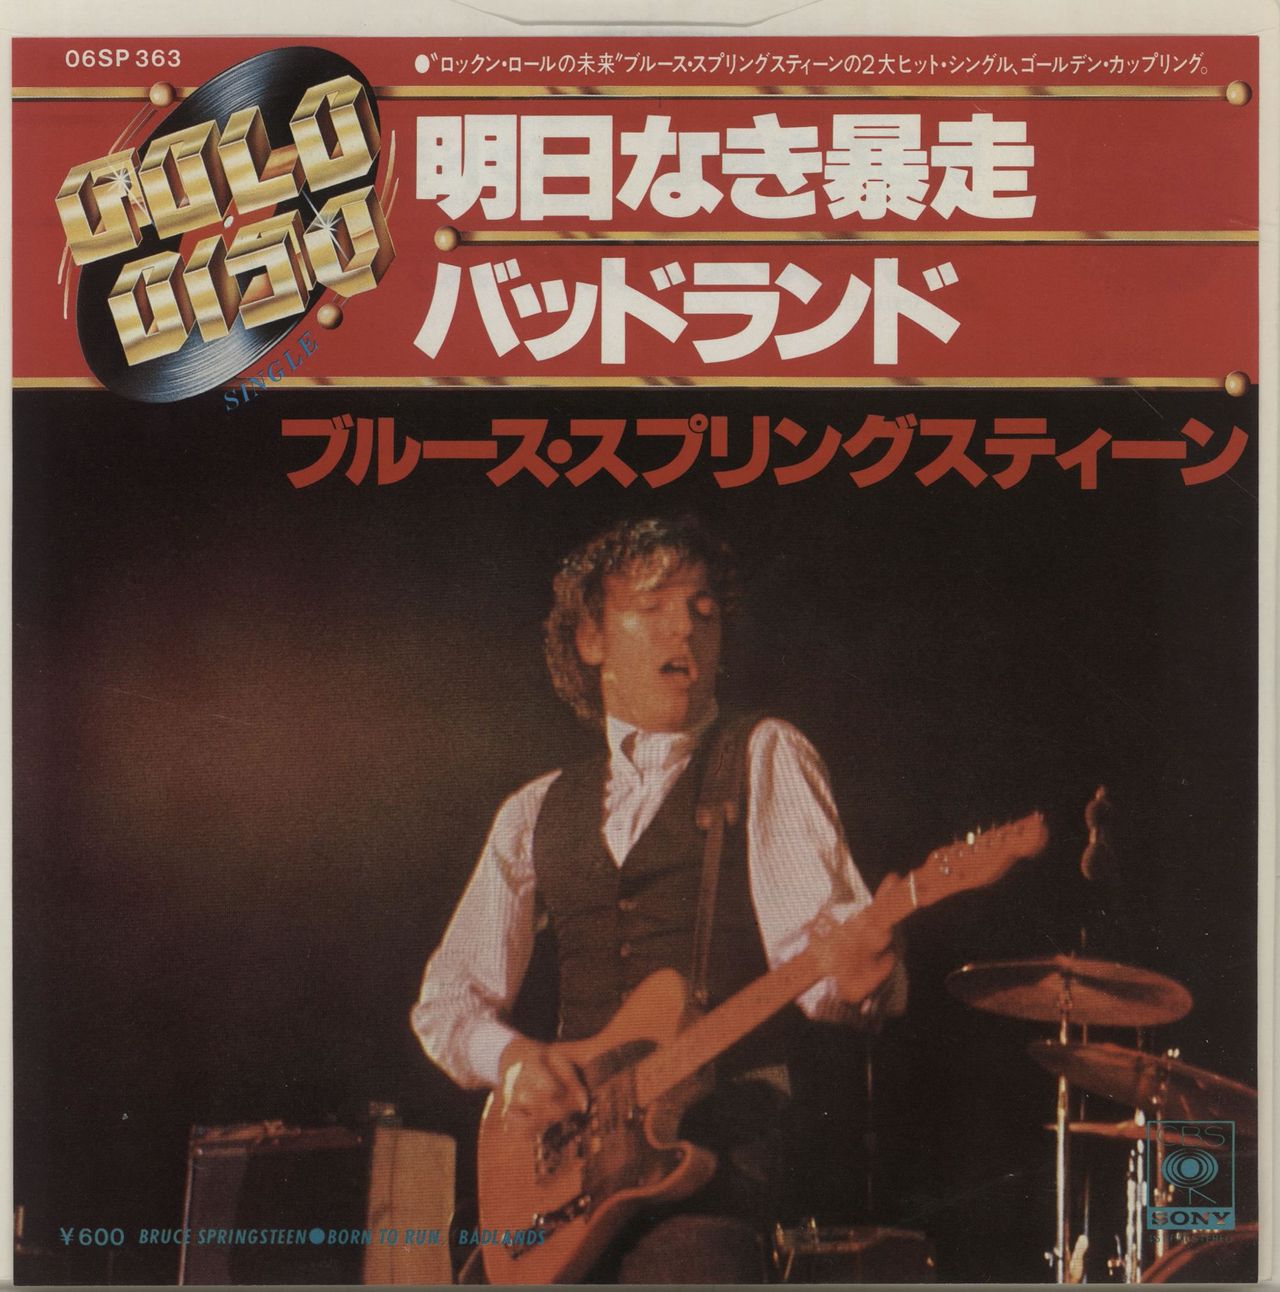 Bruce Springsteen Born To Run - Orange Label Japanese 7